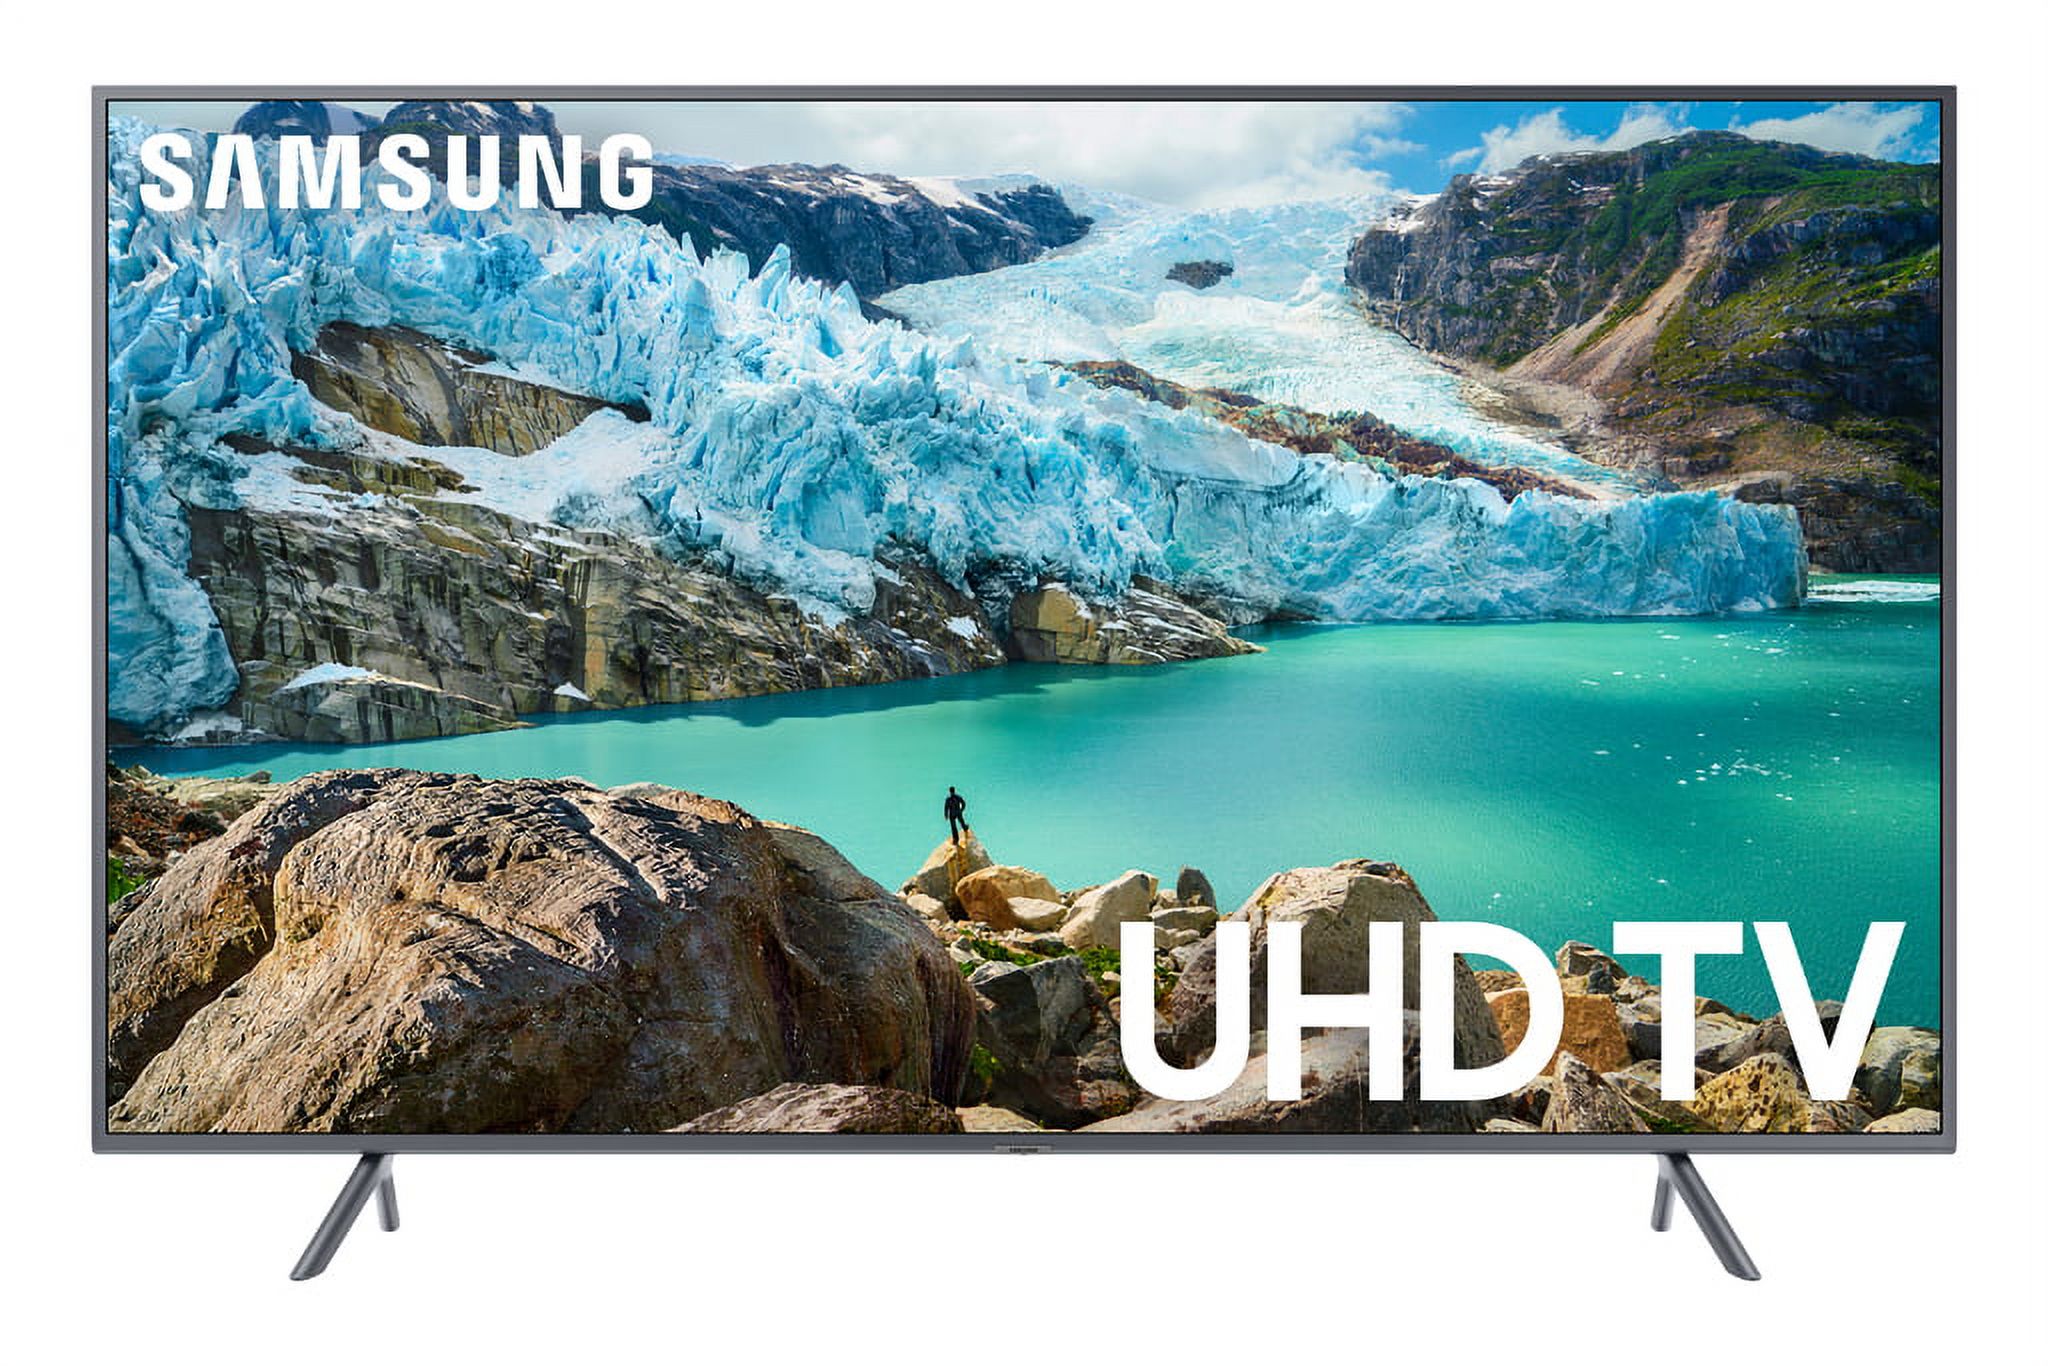 SAMSUNG 75" Class 4K Ultra HD (2160P) HDR Smart LED TV UN75RU7200 (2019 Model) - image 1 of 9